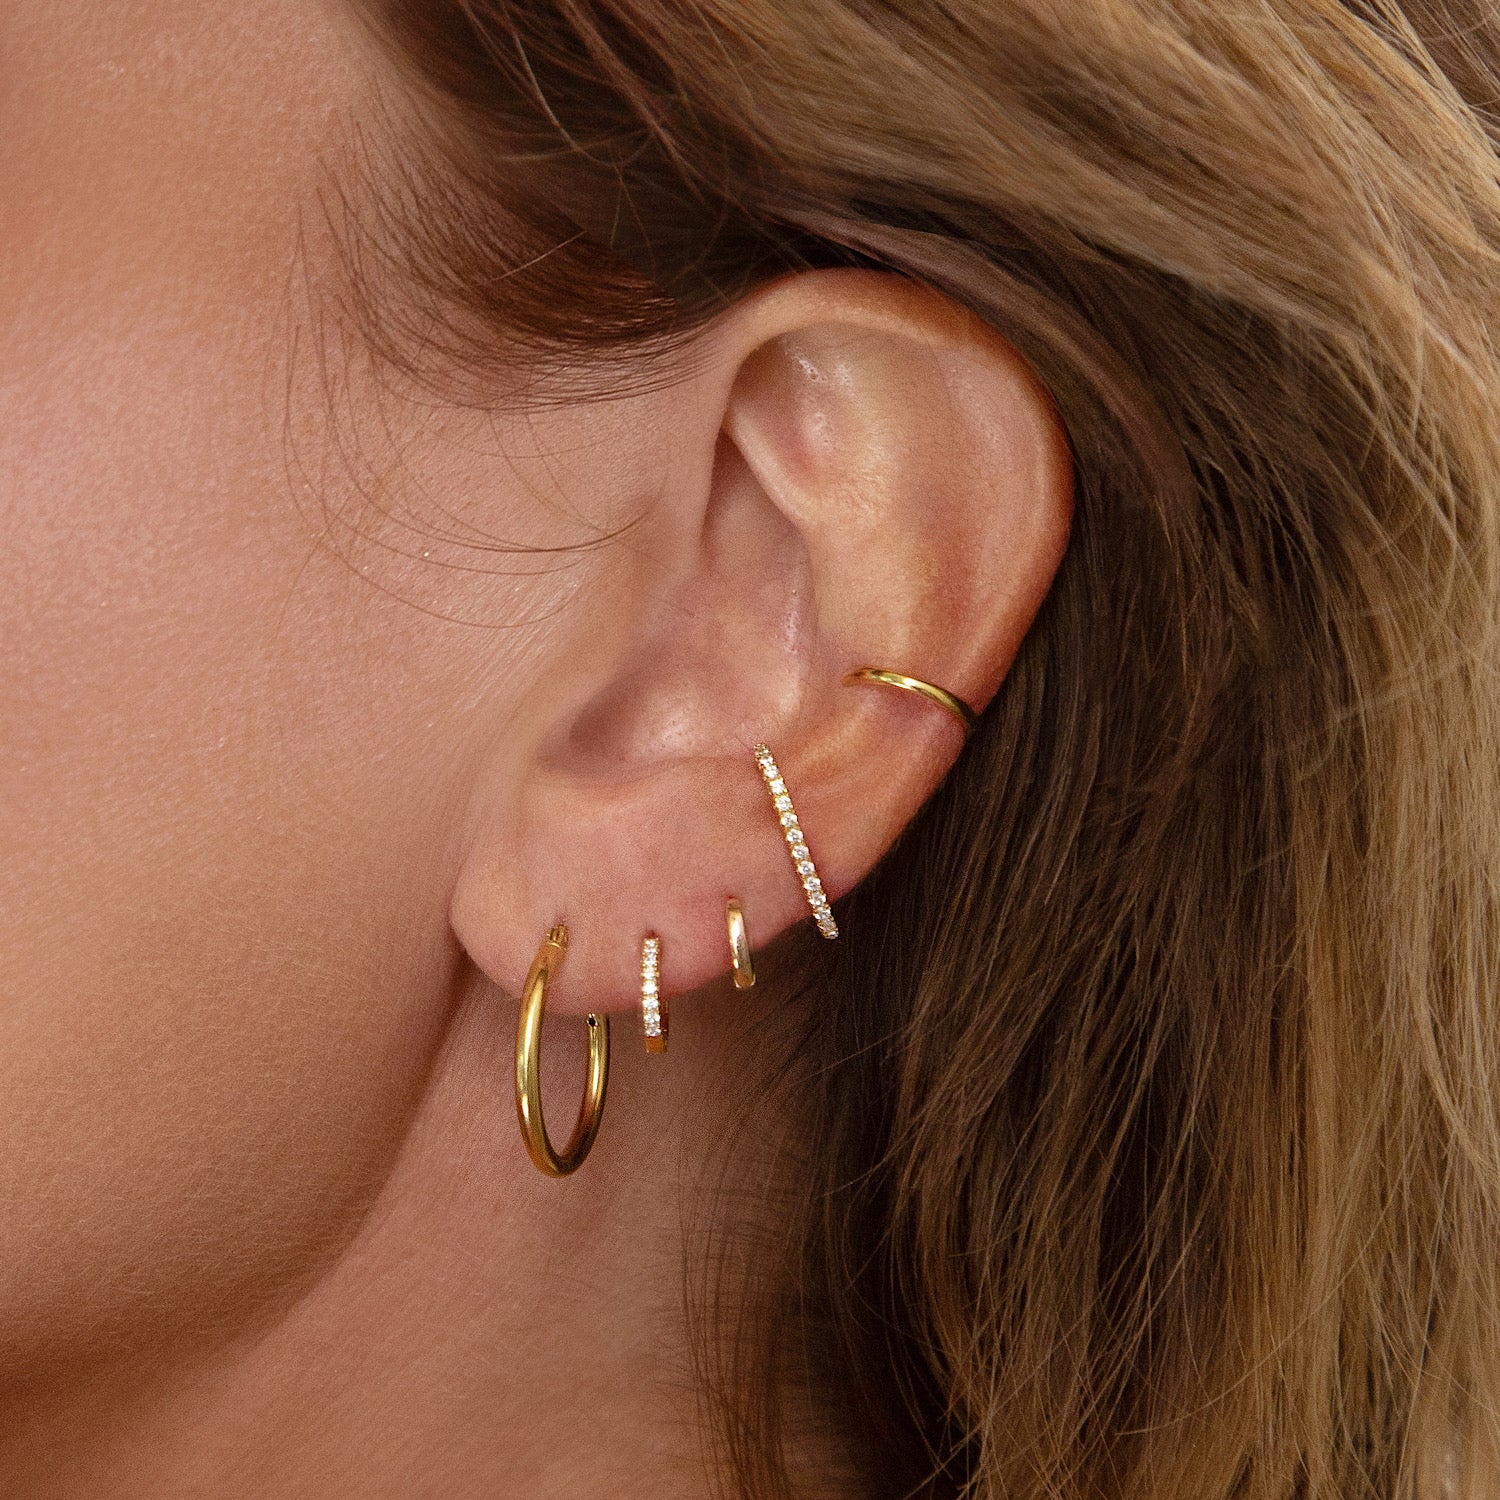 Gold ear stack made of hoops, huggie earrings, suspender earrings and ear cuff